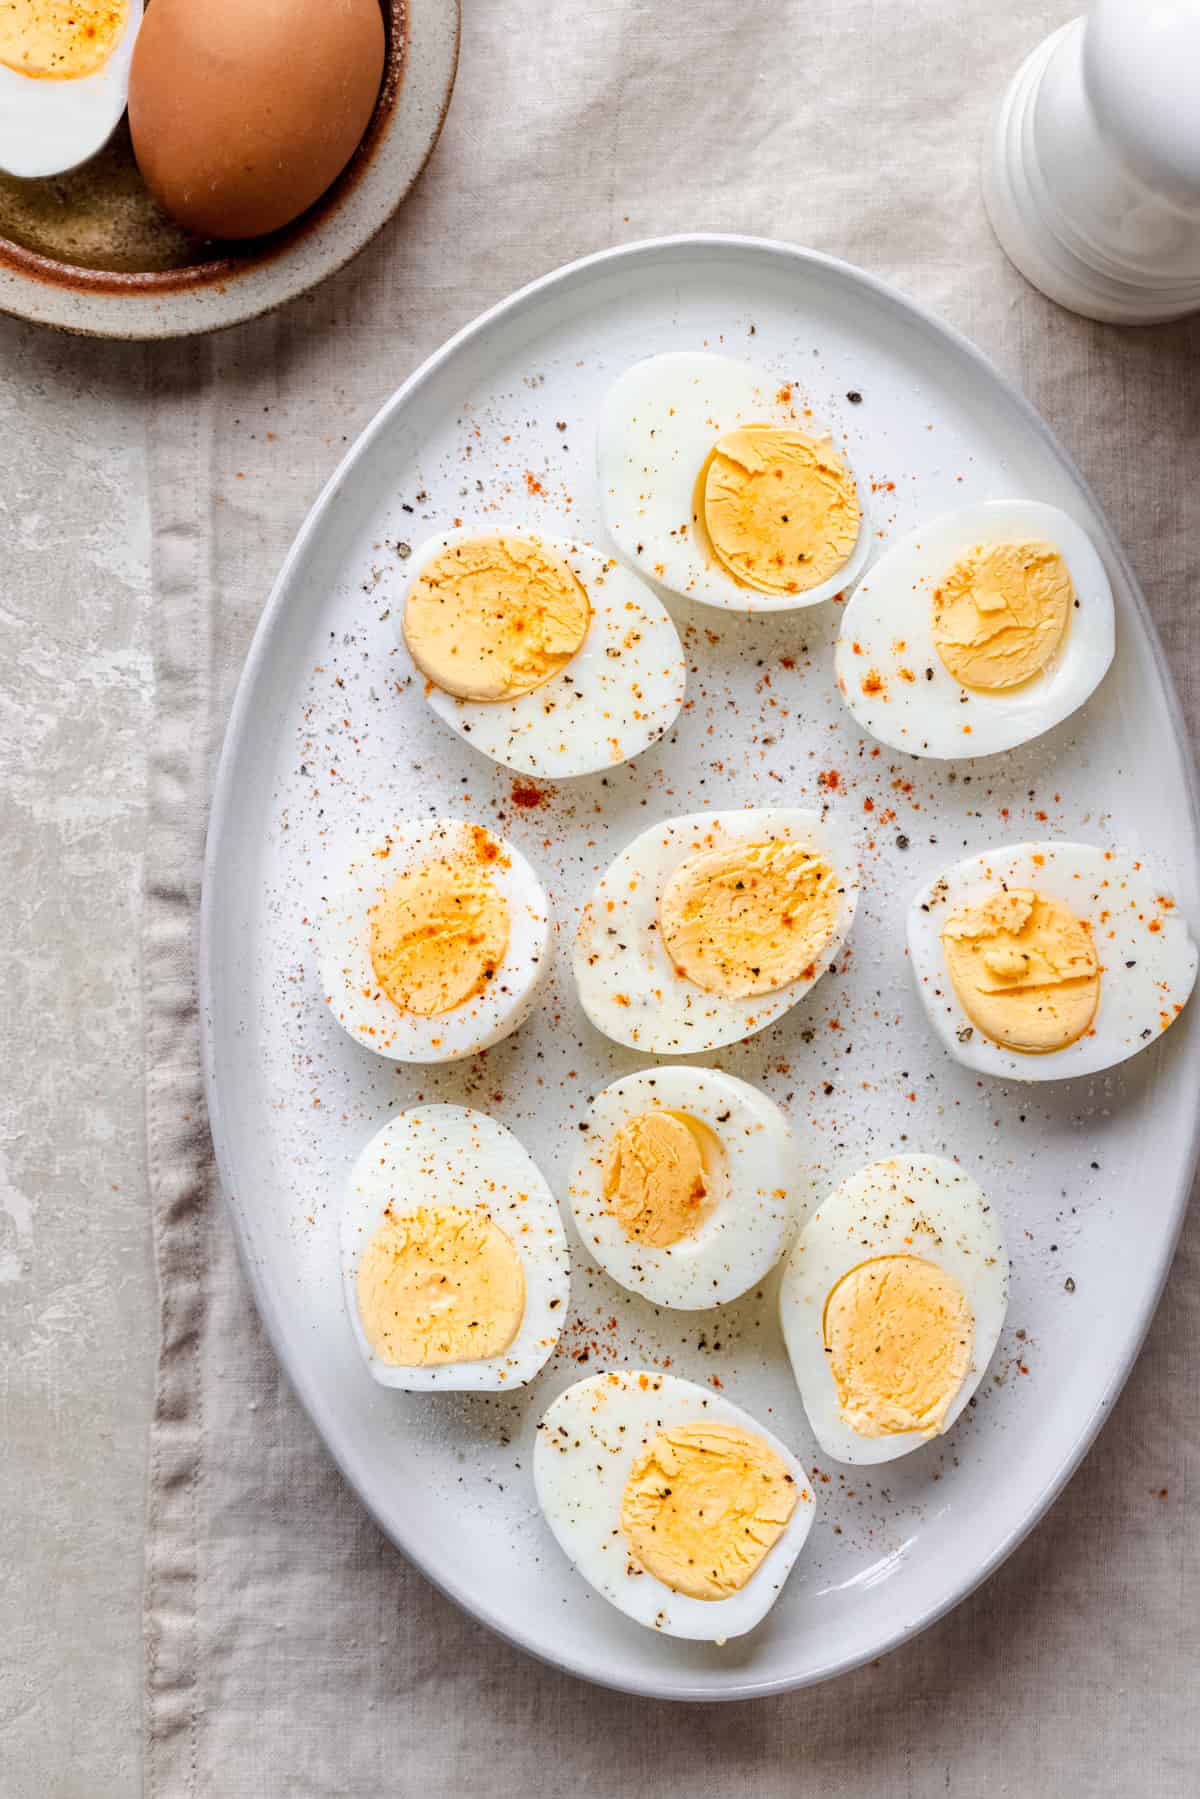 https://sandhyahariharan.co.uk/wp-content/uploads/2023/01/Air-fryer-Hard-boiled-eggs.jpg